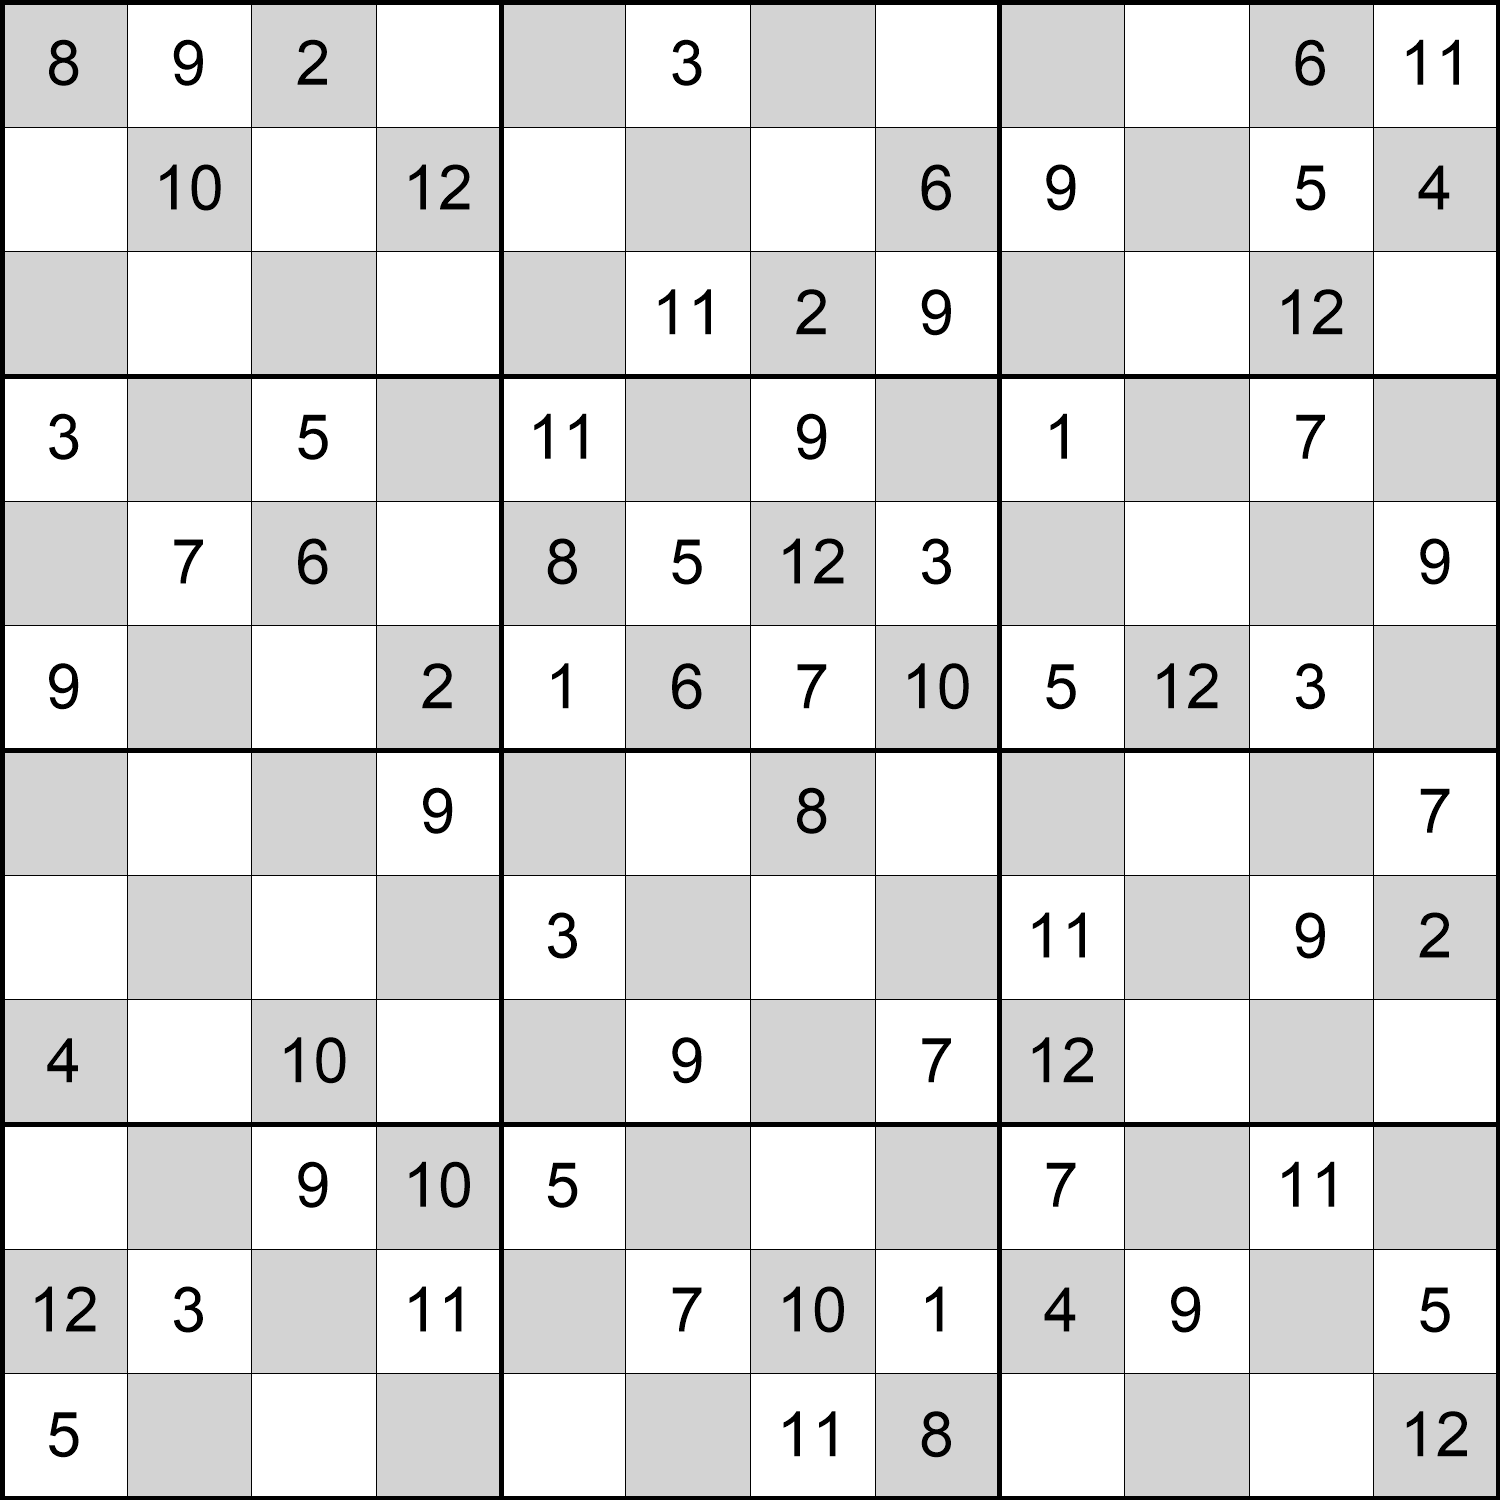 Math Sudoku Puzzles Digital Download Easy Level 4x4 Grid: 300 